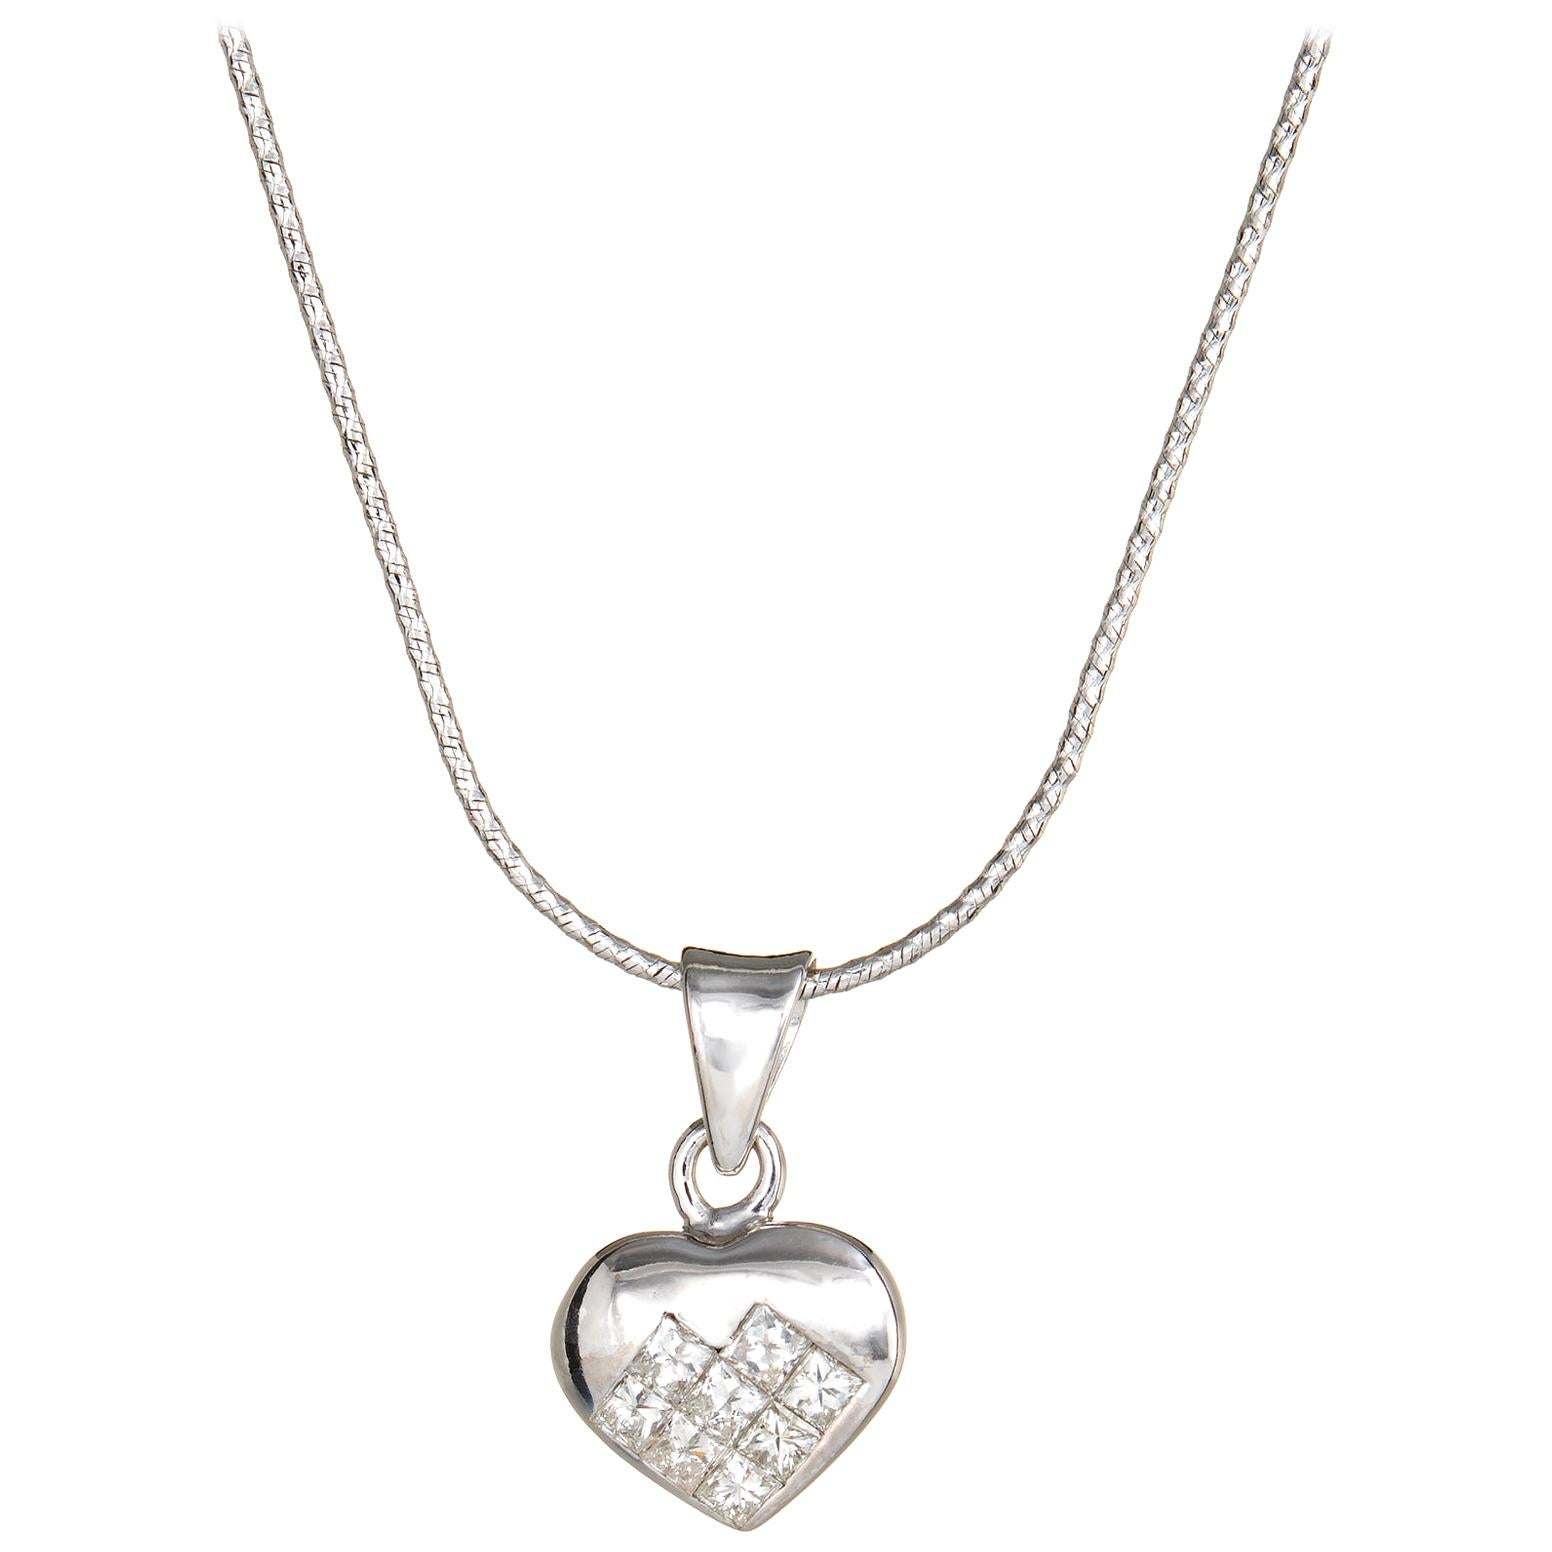 Collier de succession en or 18 carats avec pendentif en forme de cœur serti invisible de diamants